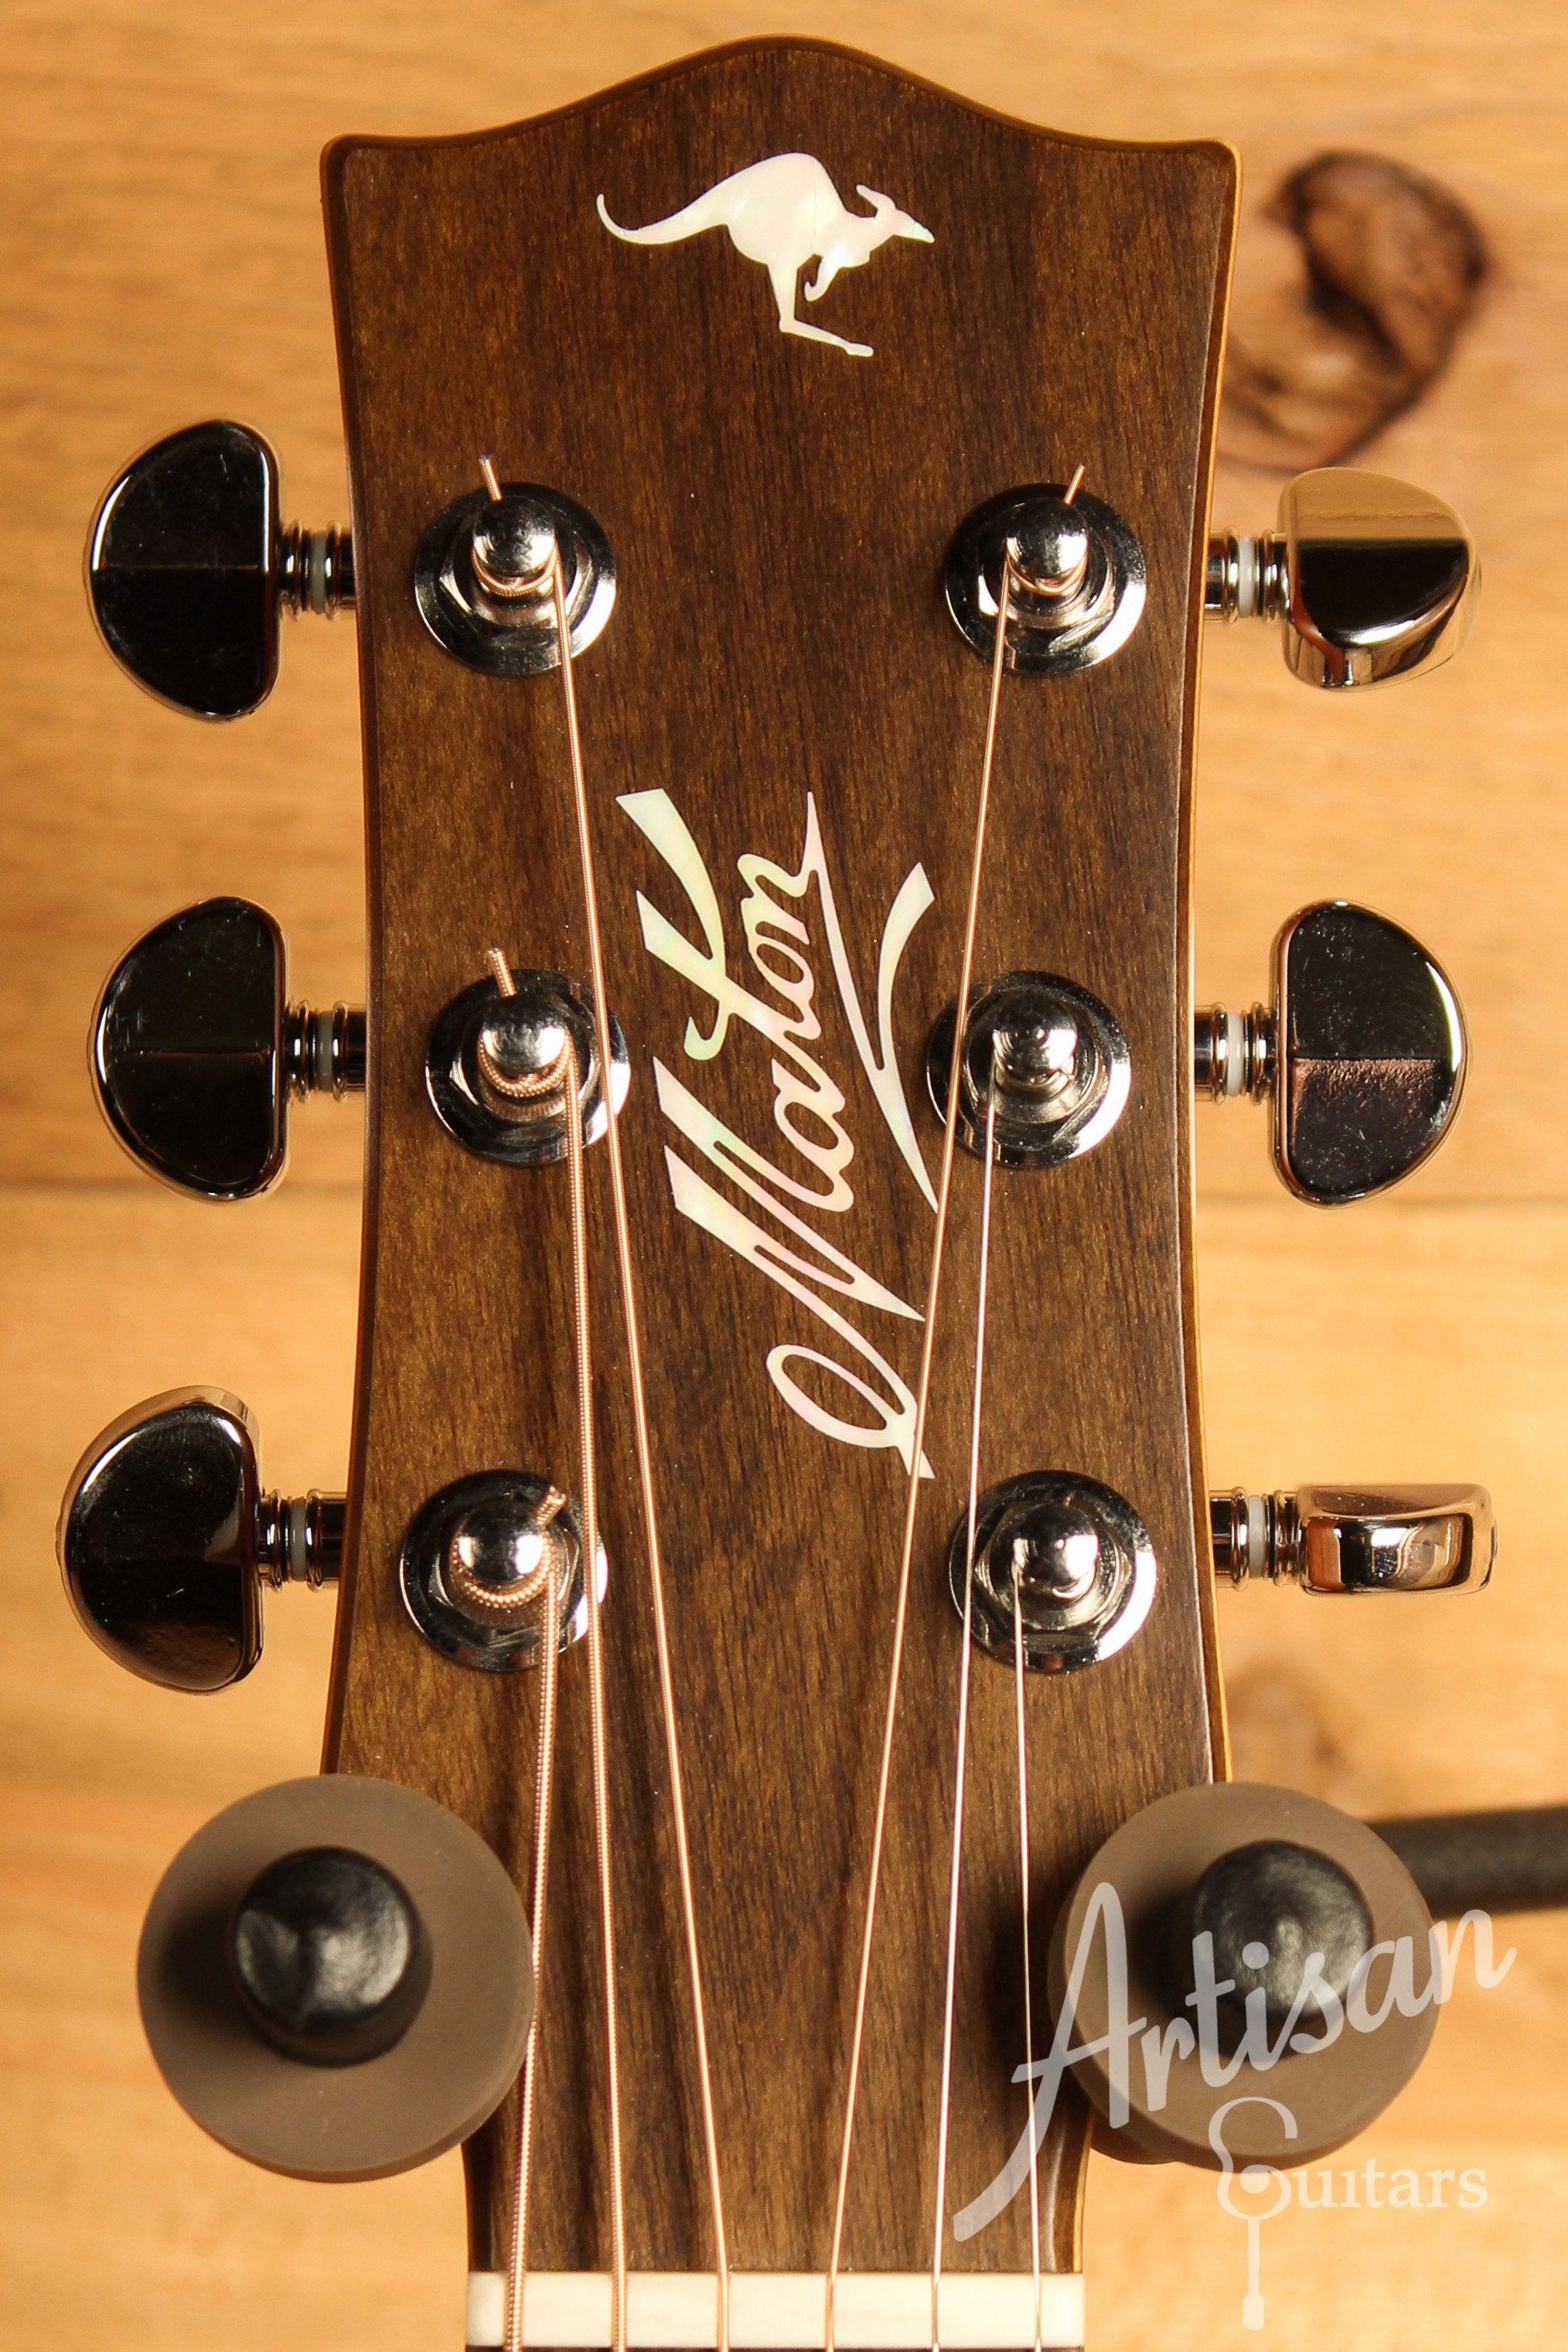 Maton EBG 808C TE Tommy Emmanuel Signature Guitar w/ Cutaway ID-13016 - Artisan Guitars